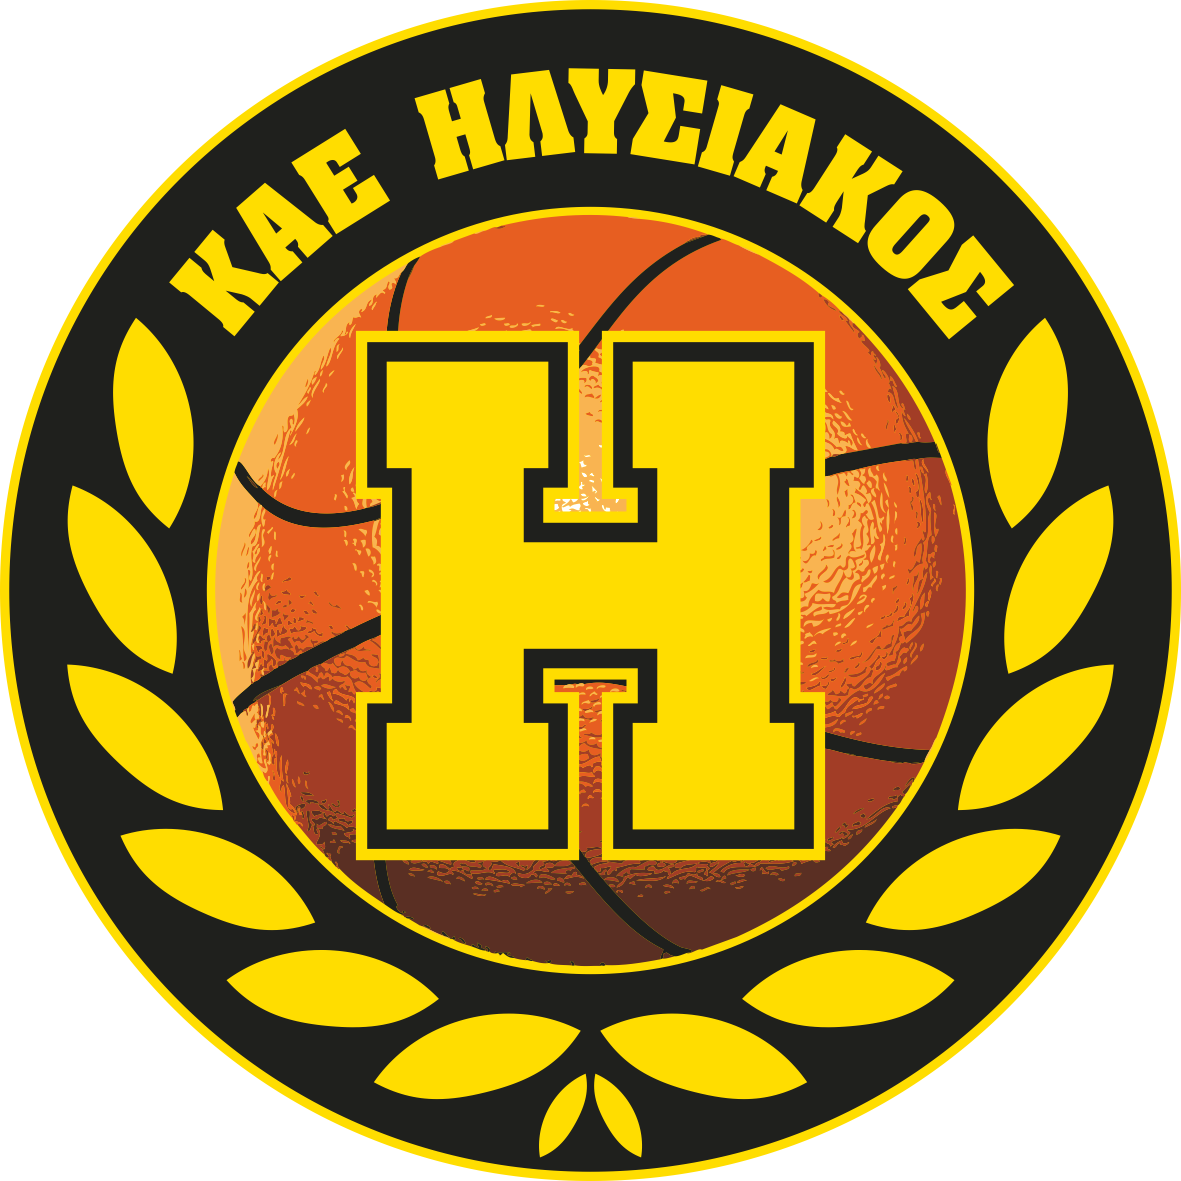 Hlysiakos_ilisiakos-logo